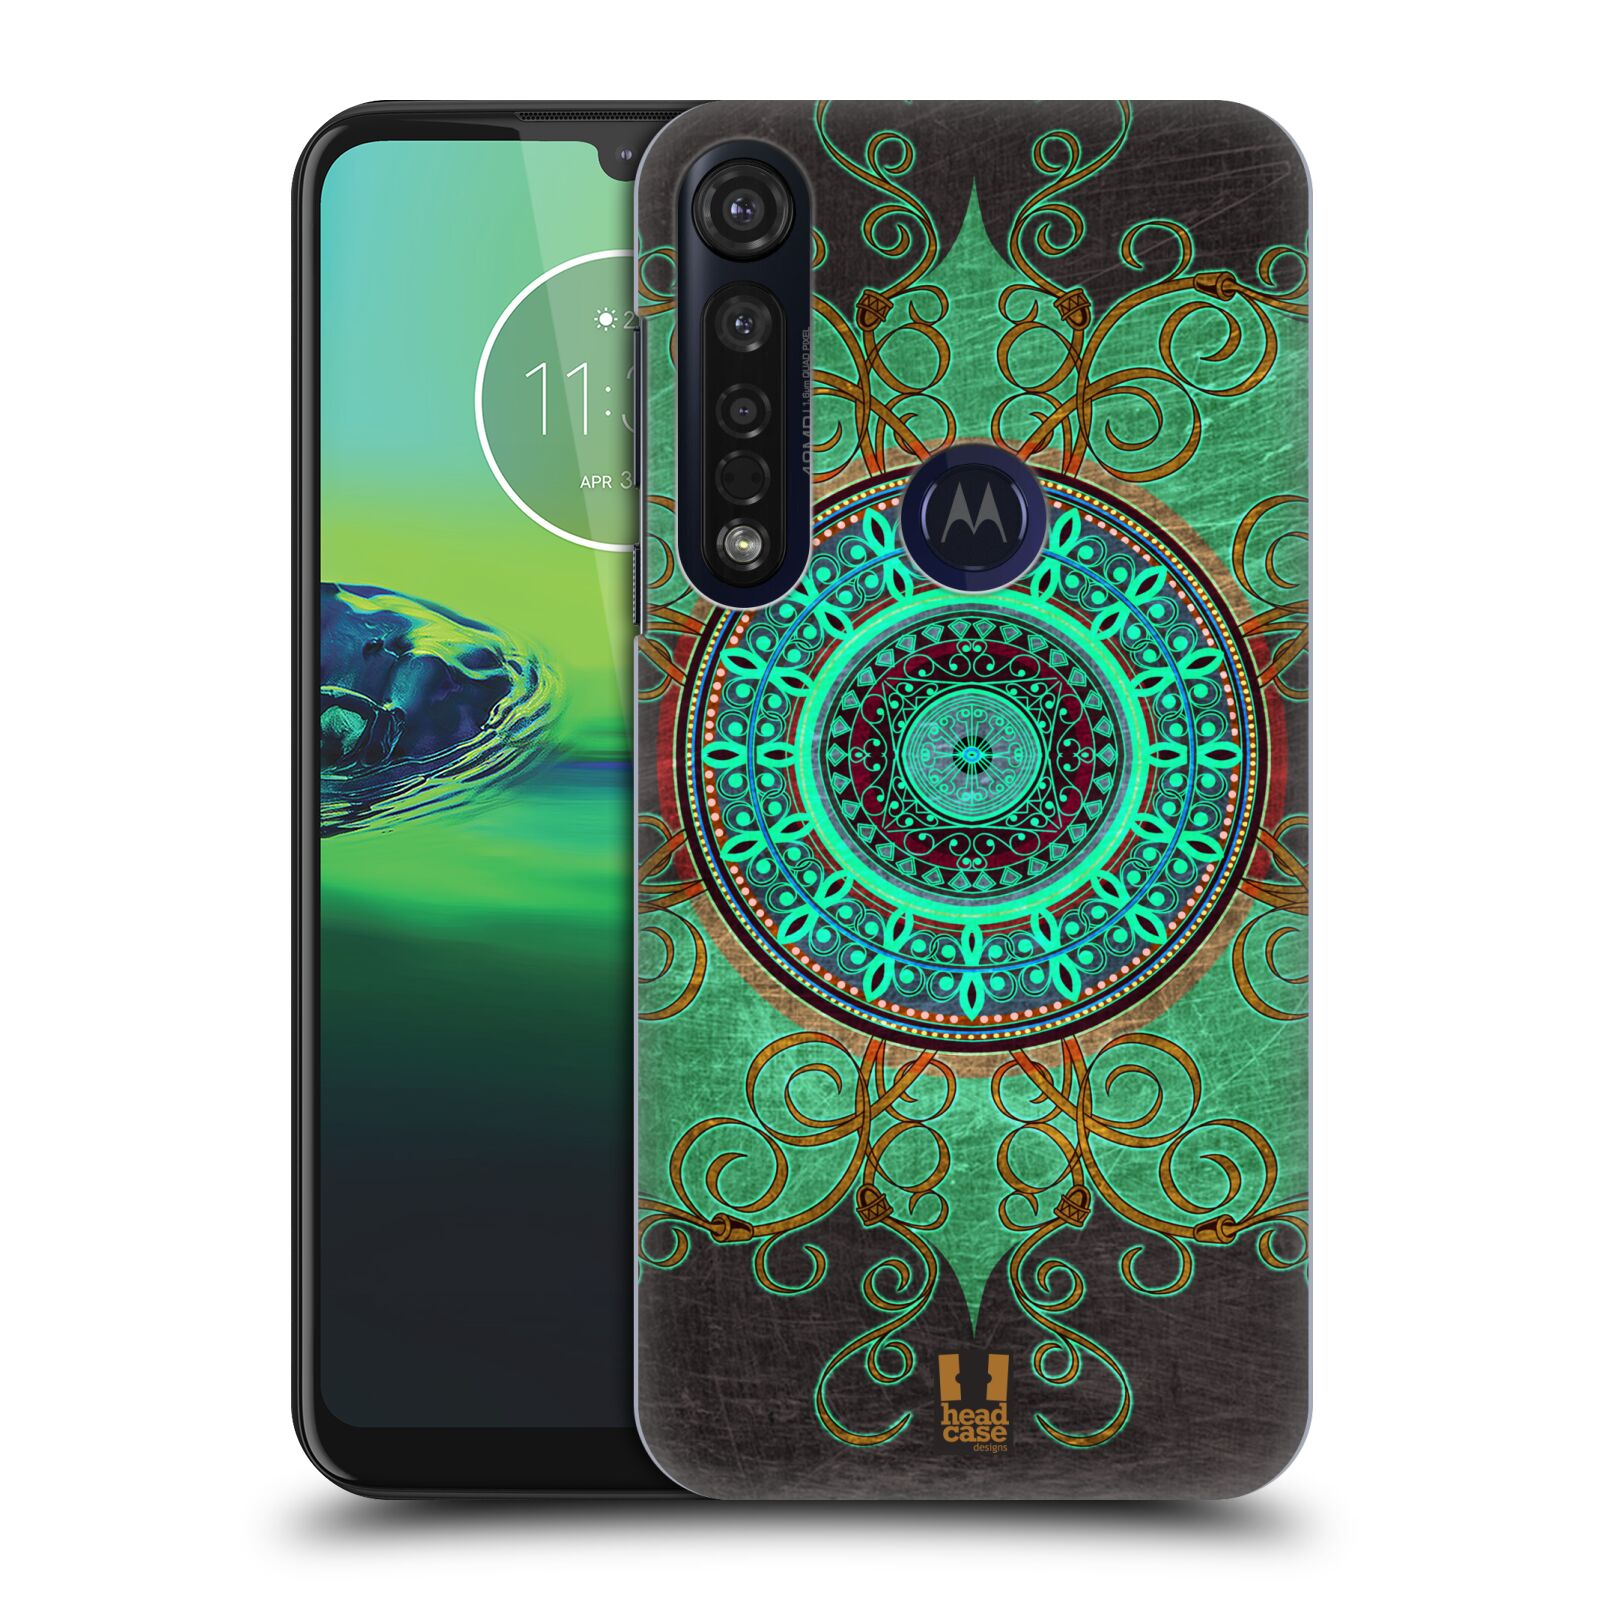 Pouzdro na mobil Motorola Moto G8 PLUS - HEAD CASE - vzor ARABESKA MANDALA ZELENÁ